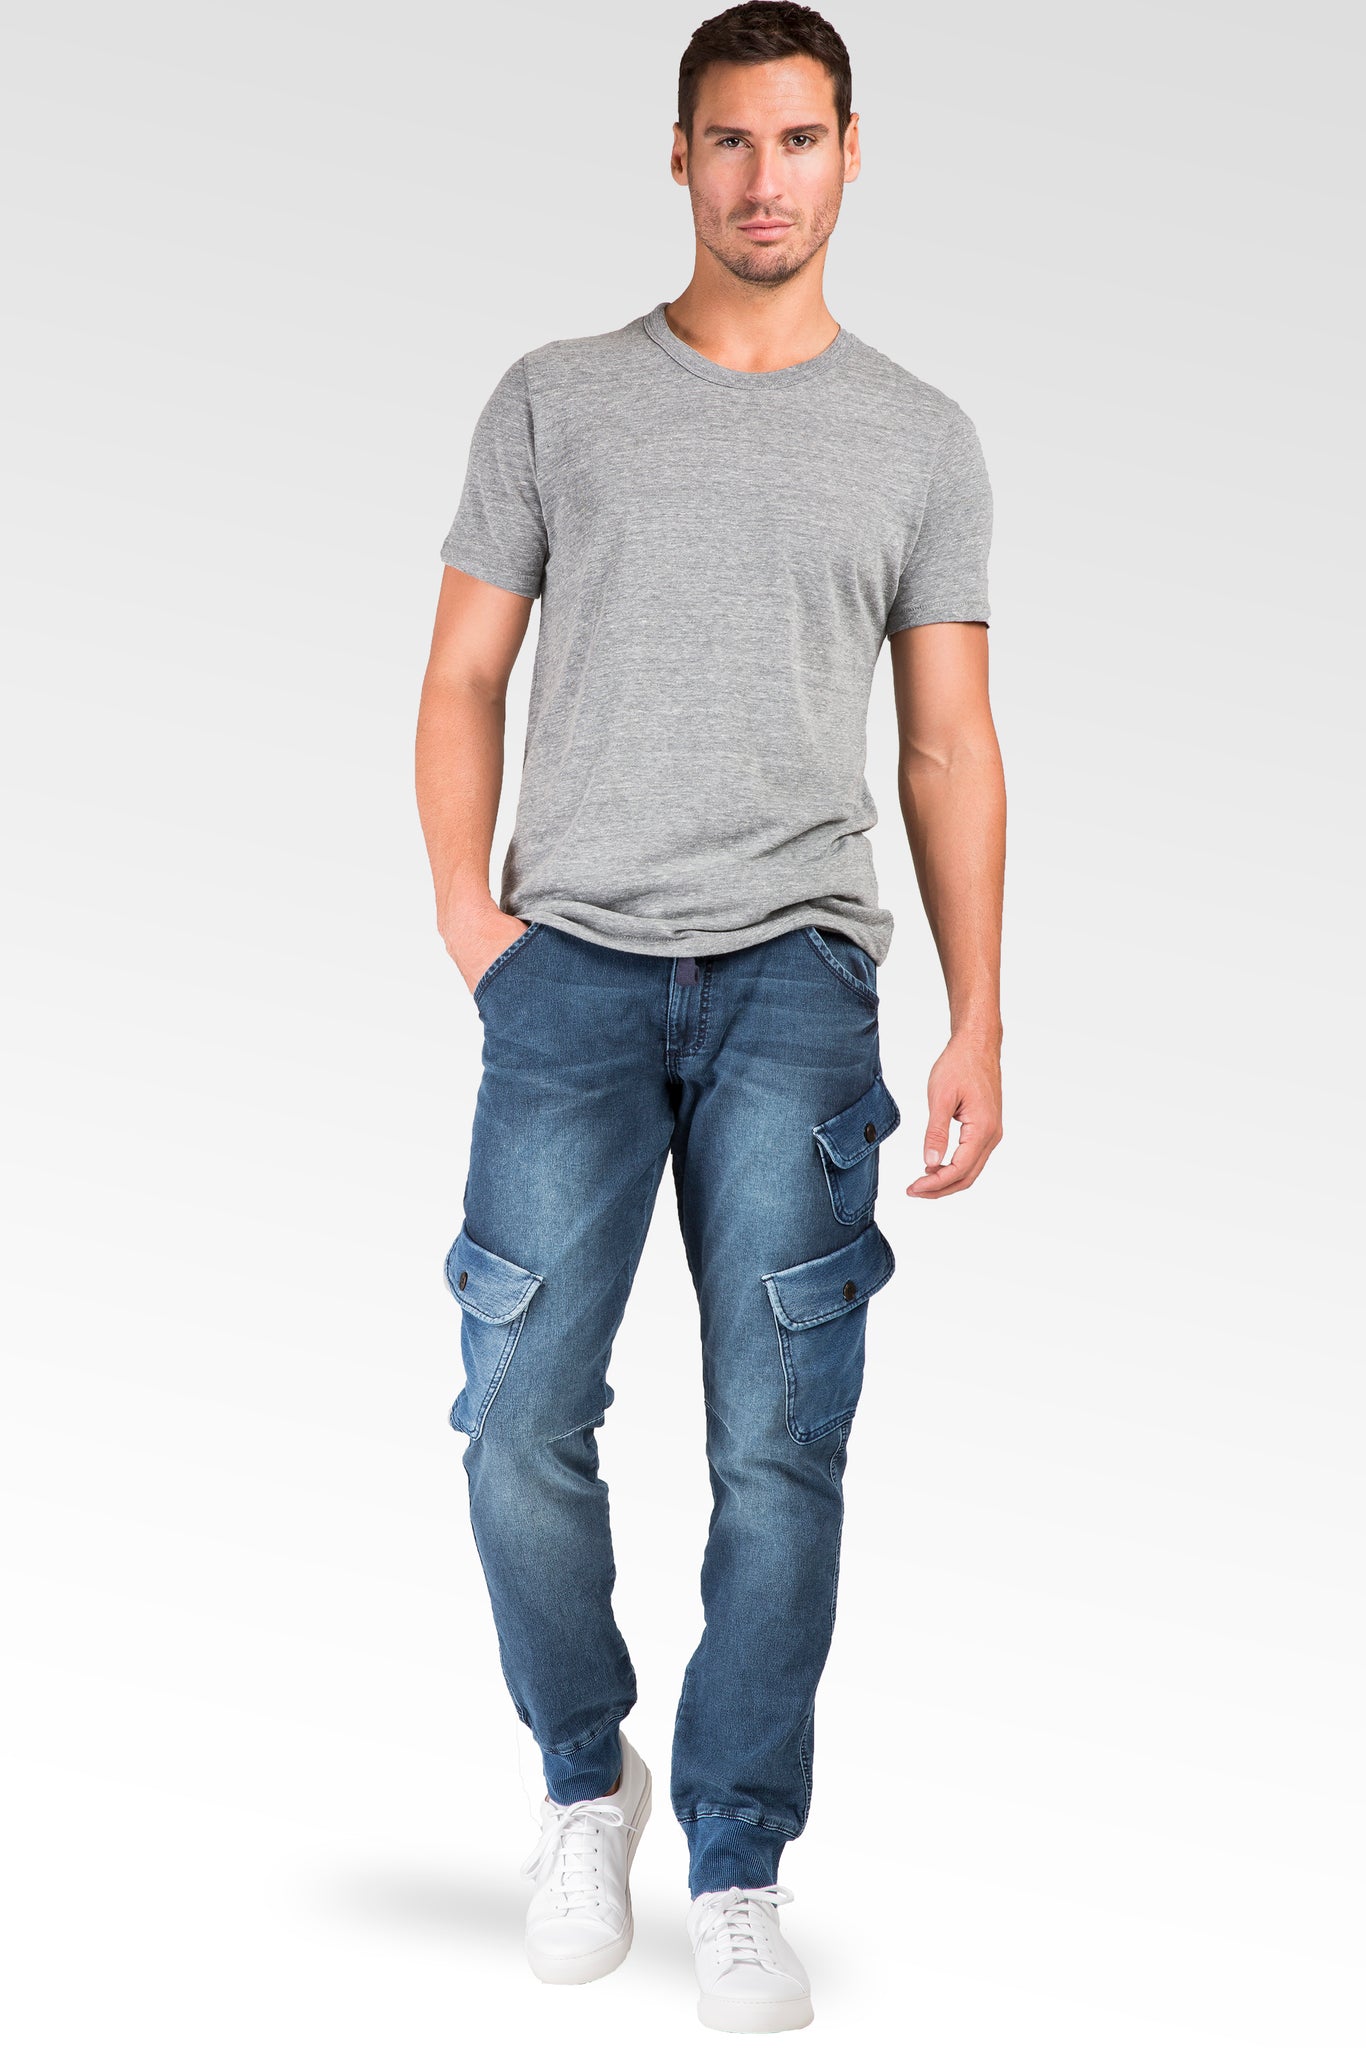 Ocean Blue Washed Premium Knit Denim Cargo Jogger Jeans Angled Side Cargo Pockets